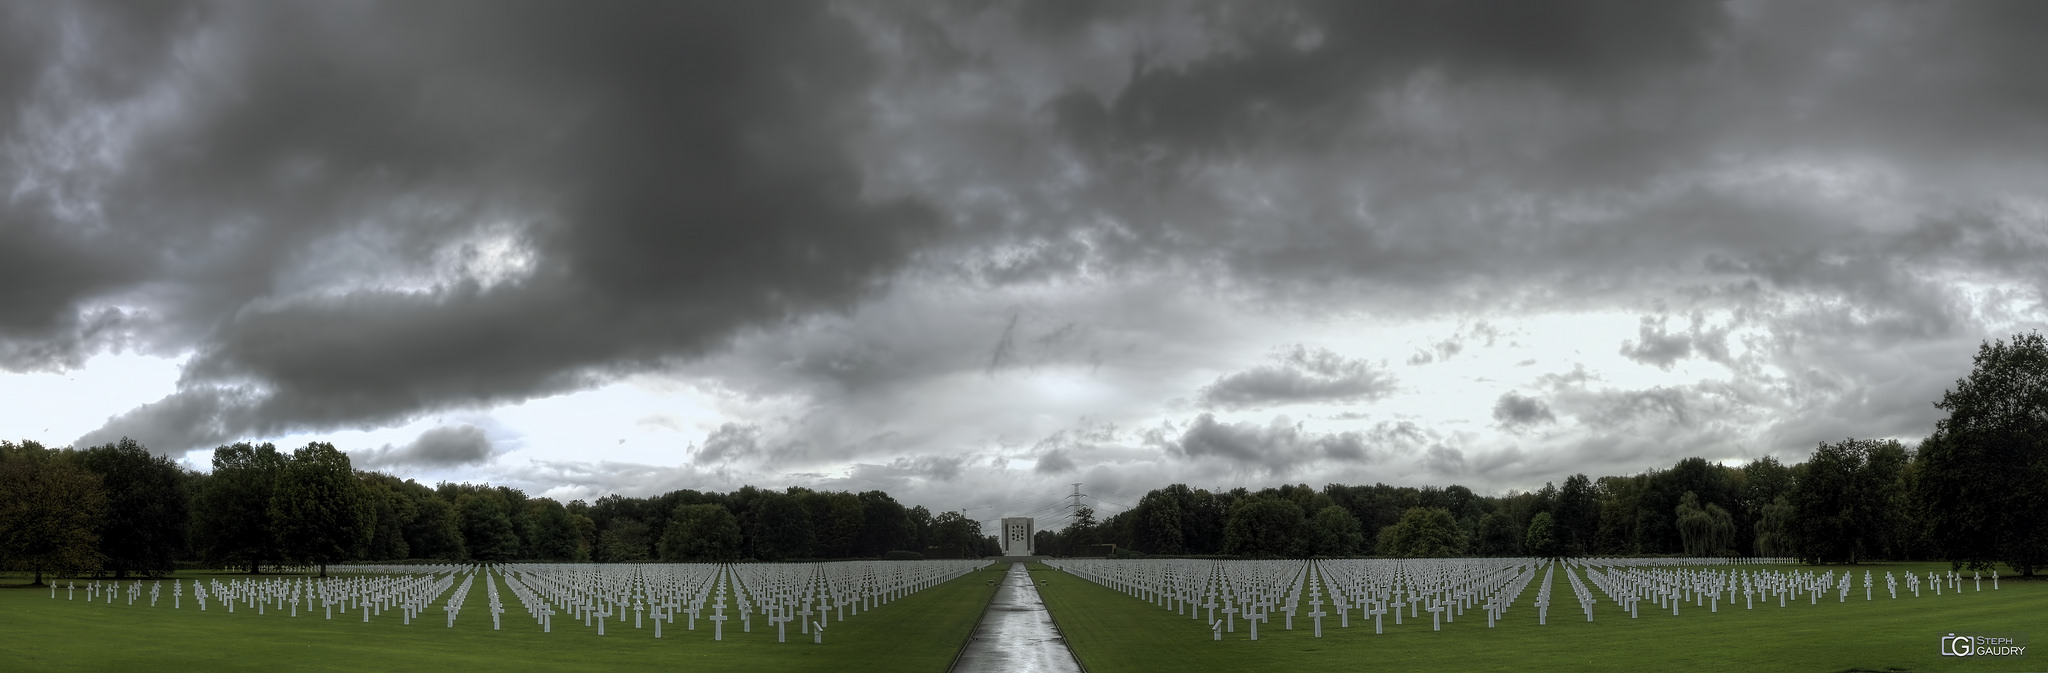 Ardennes American Cemetery and Memorial [Klik om de diavoorstelling te starten]